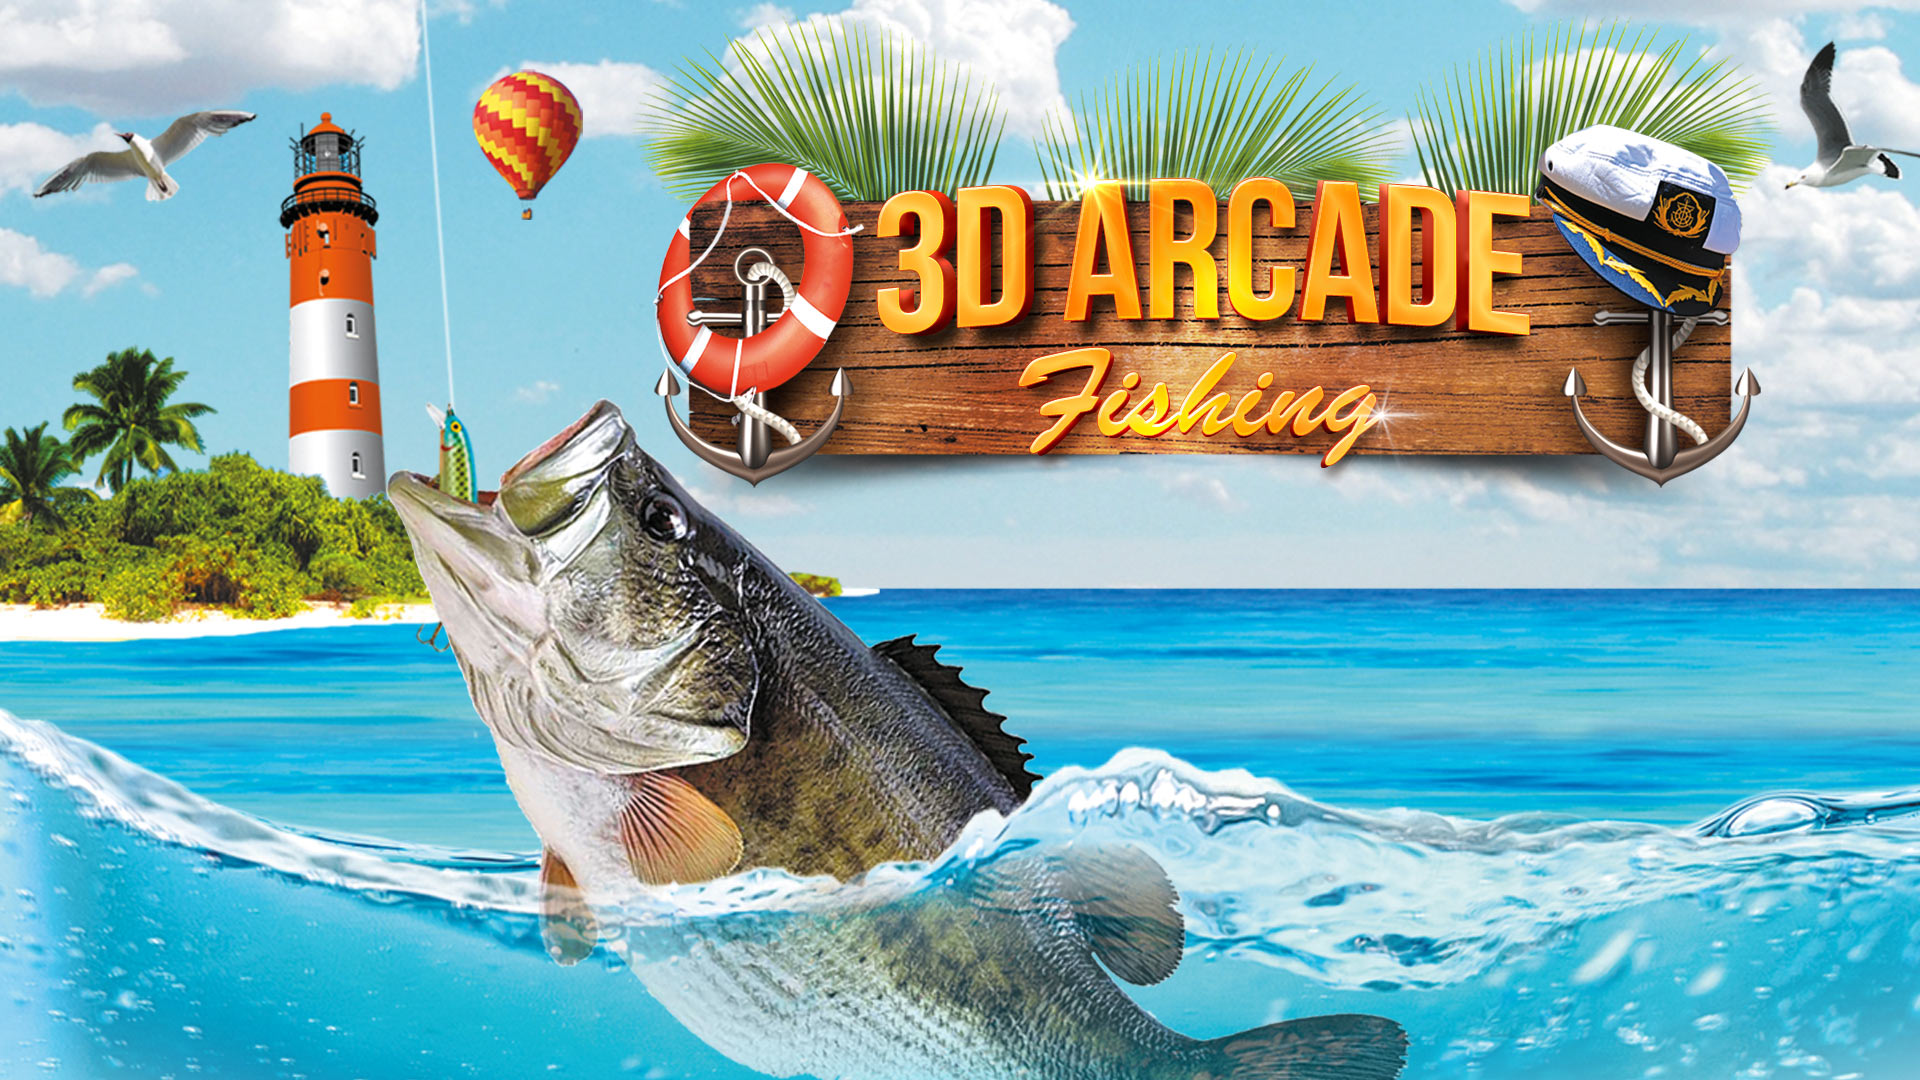 3D Arcade Fishing/Nintendo Switch/eShop Download